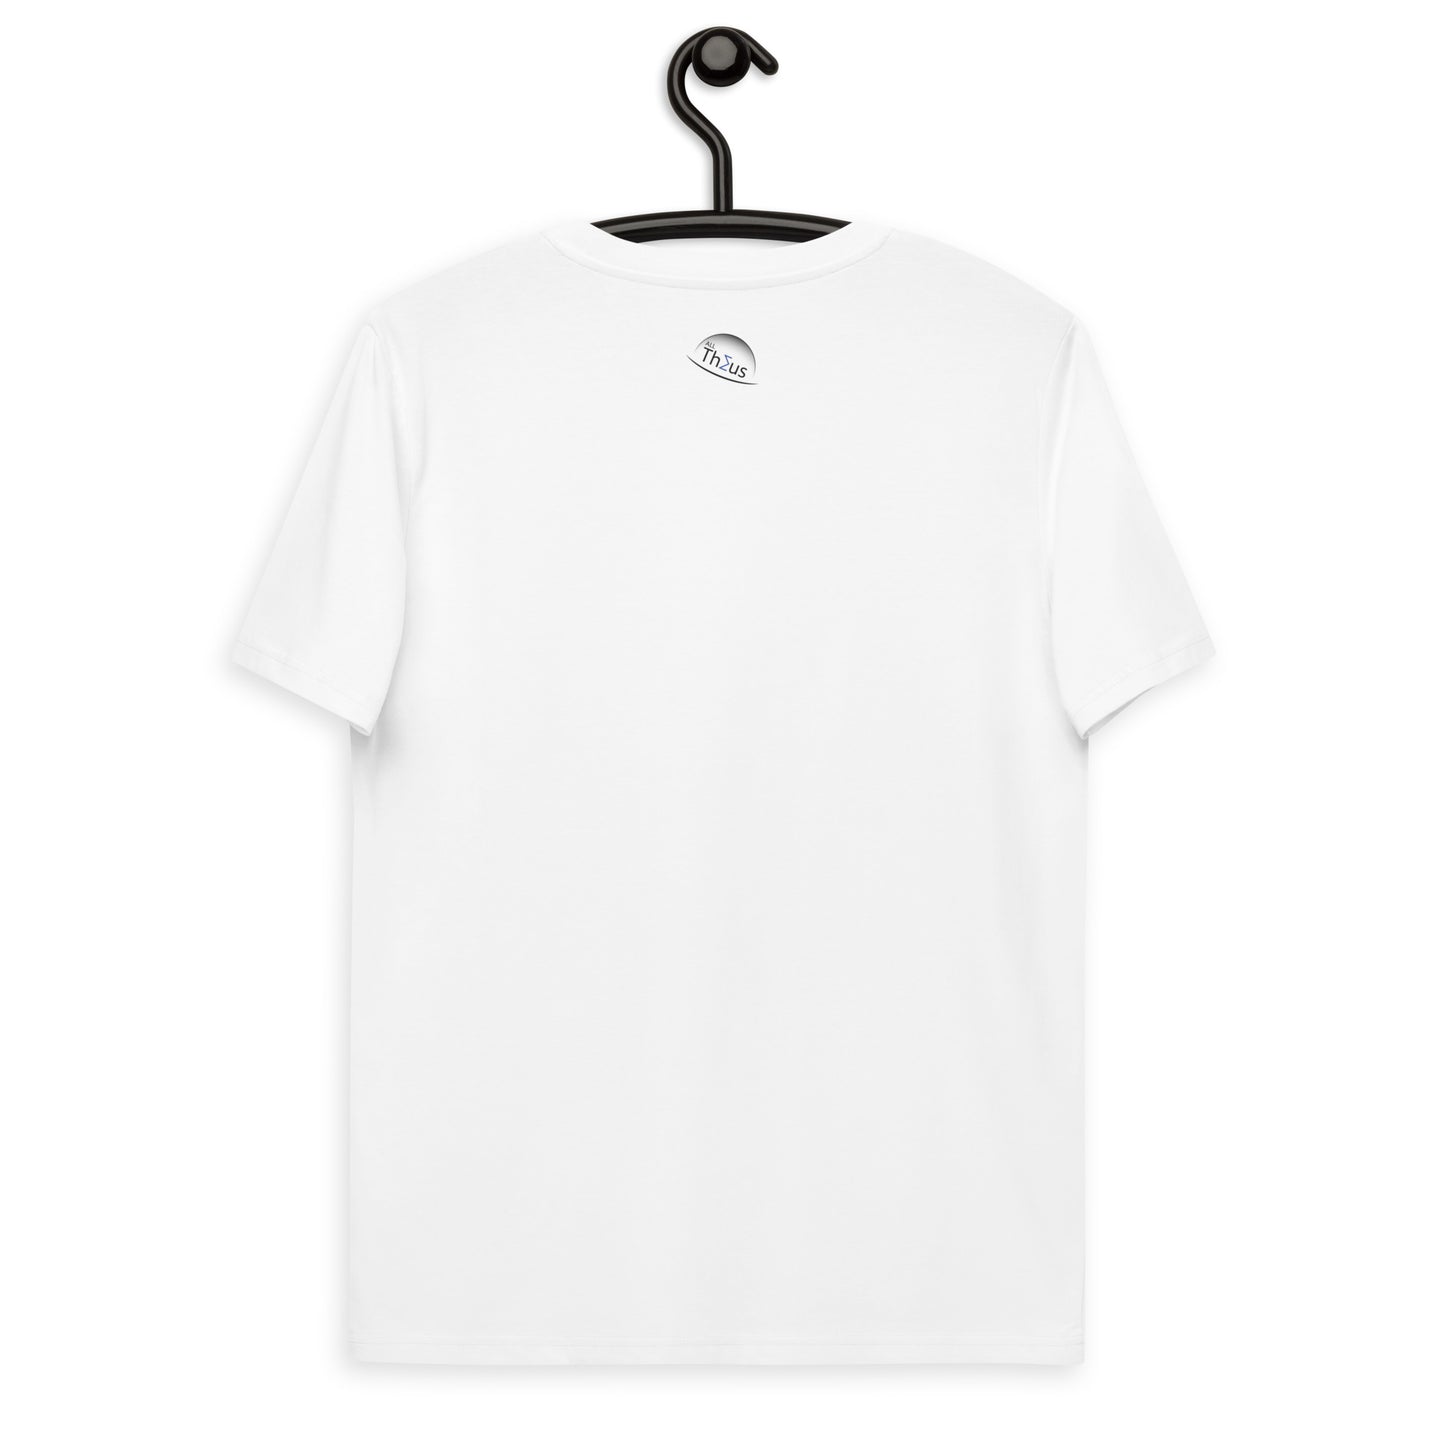 Unisex organic cotton t-shirt - Muon Magnetic Moments Matter